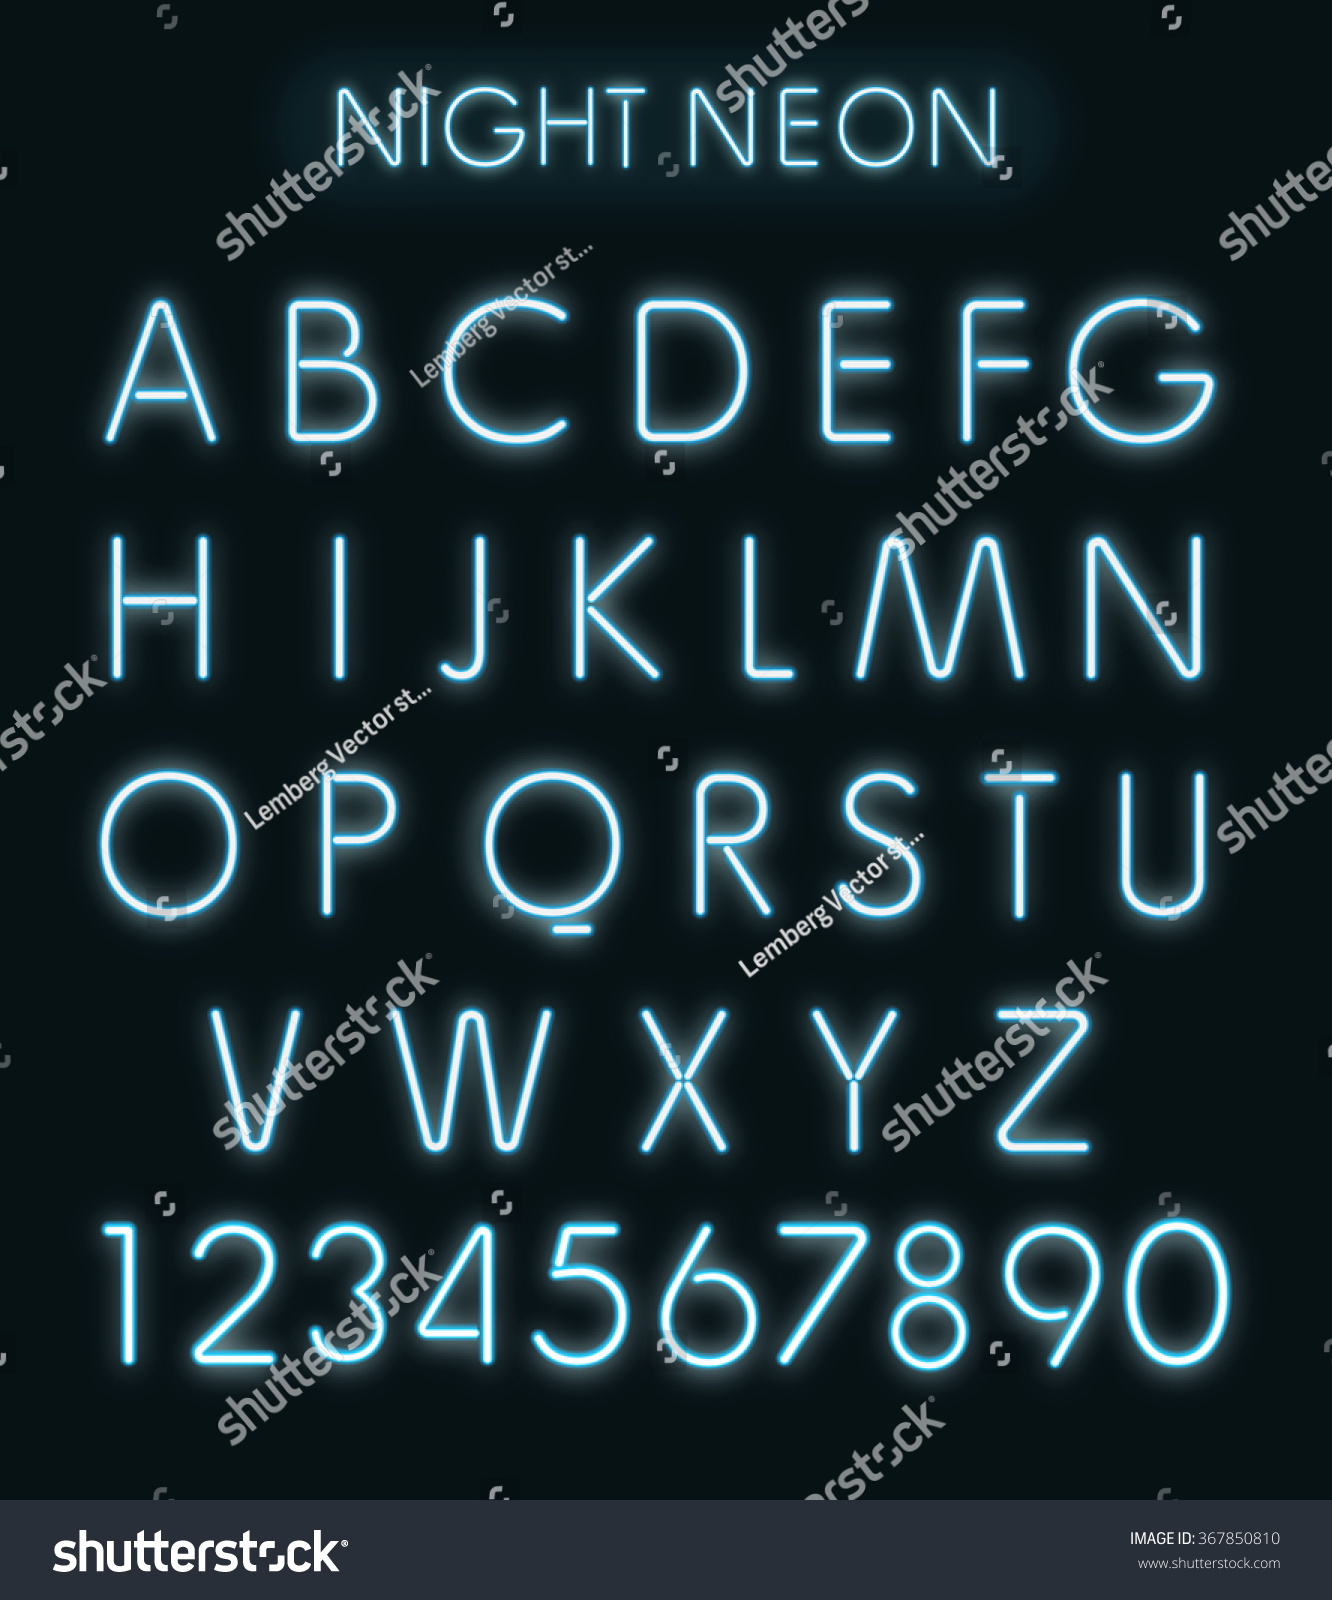 Vector Blue Light Neon Alphabet In Dark - 367850810 : Shutterstock